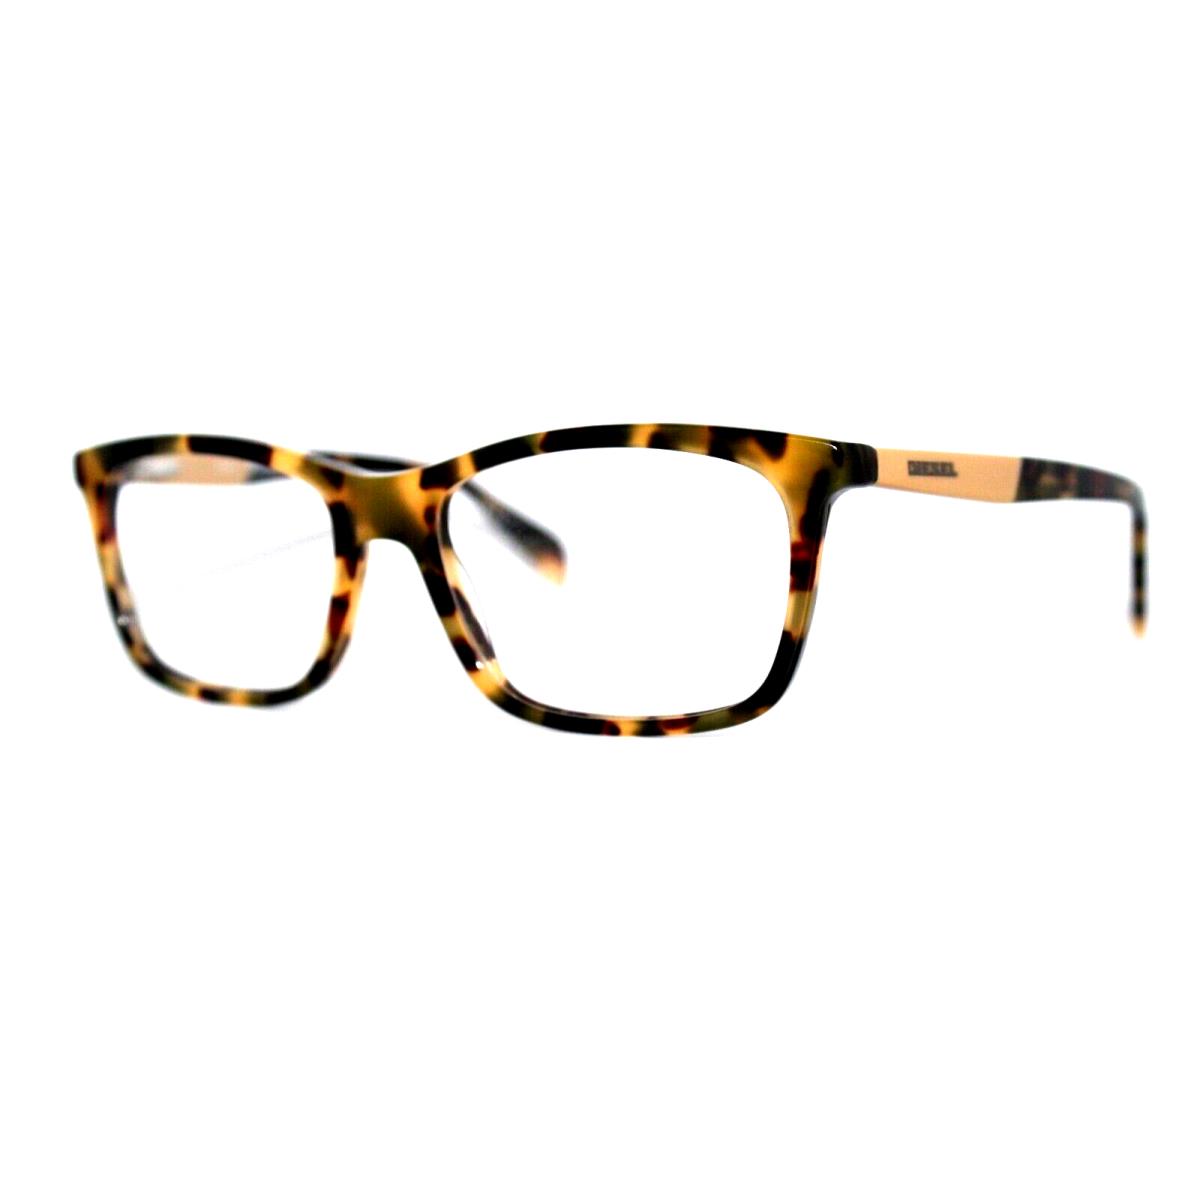 Diesel DL5089 052 Tortoise Eyeglasses Frames 54-17-140MM W/case